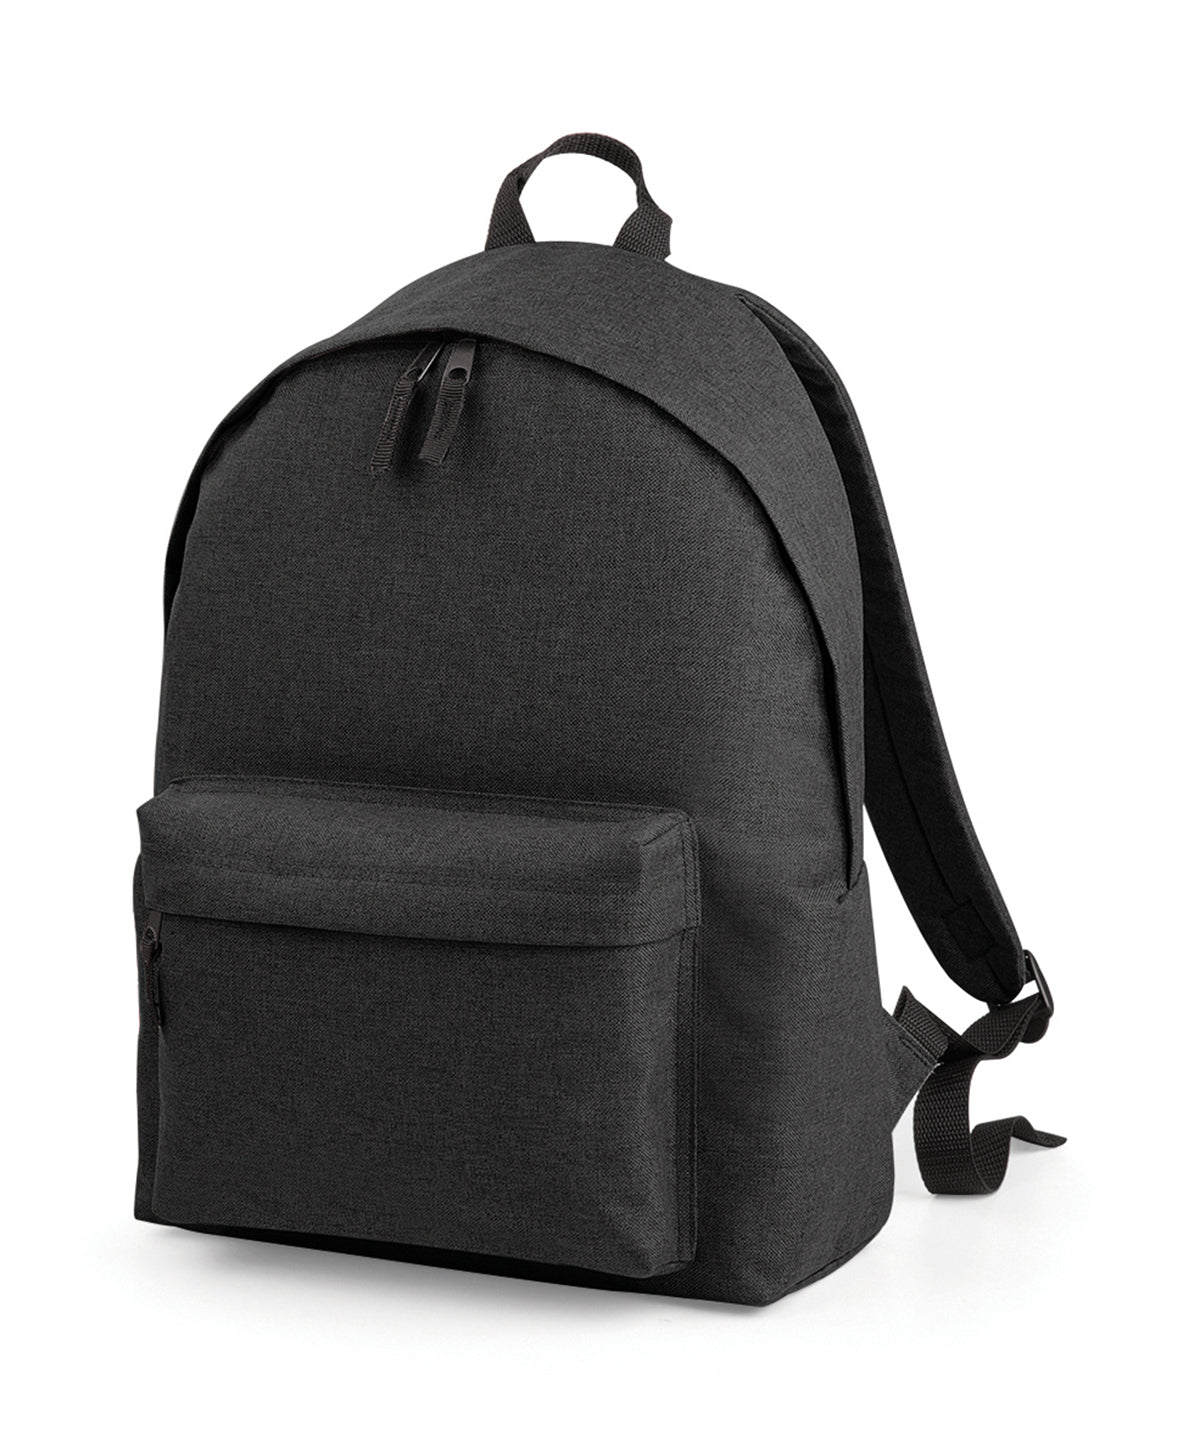 Personalised Bags - Dark Grey Bagbase Two-tone fashion backpack